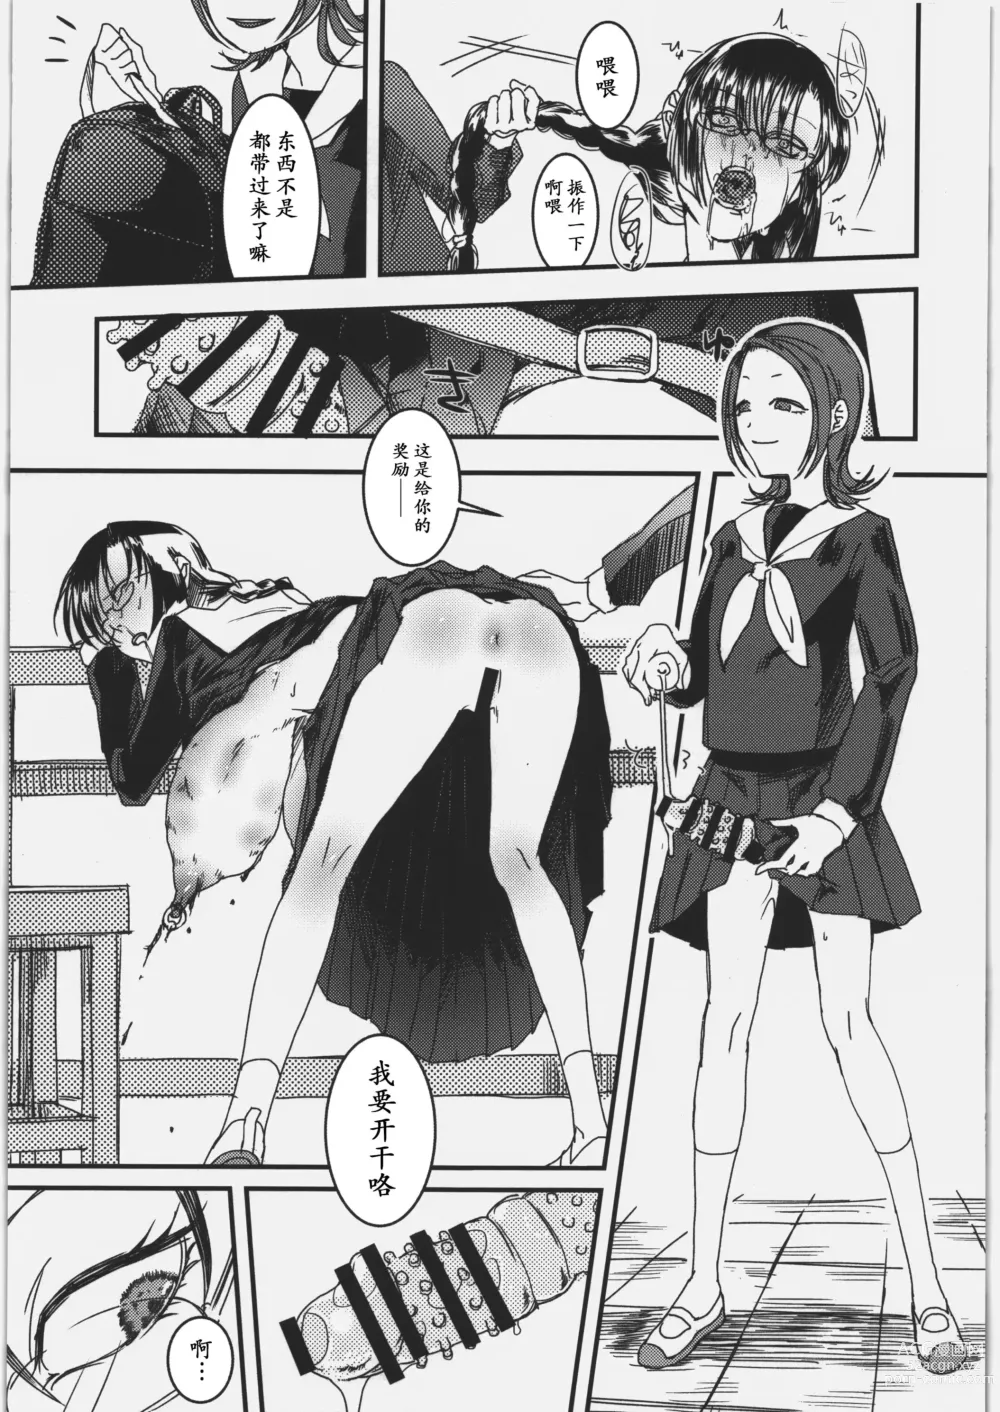 Page 9 of doujinshi Riyuu no Nai Asobi